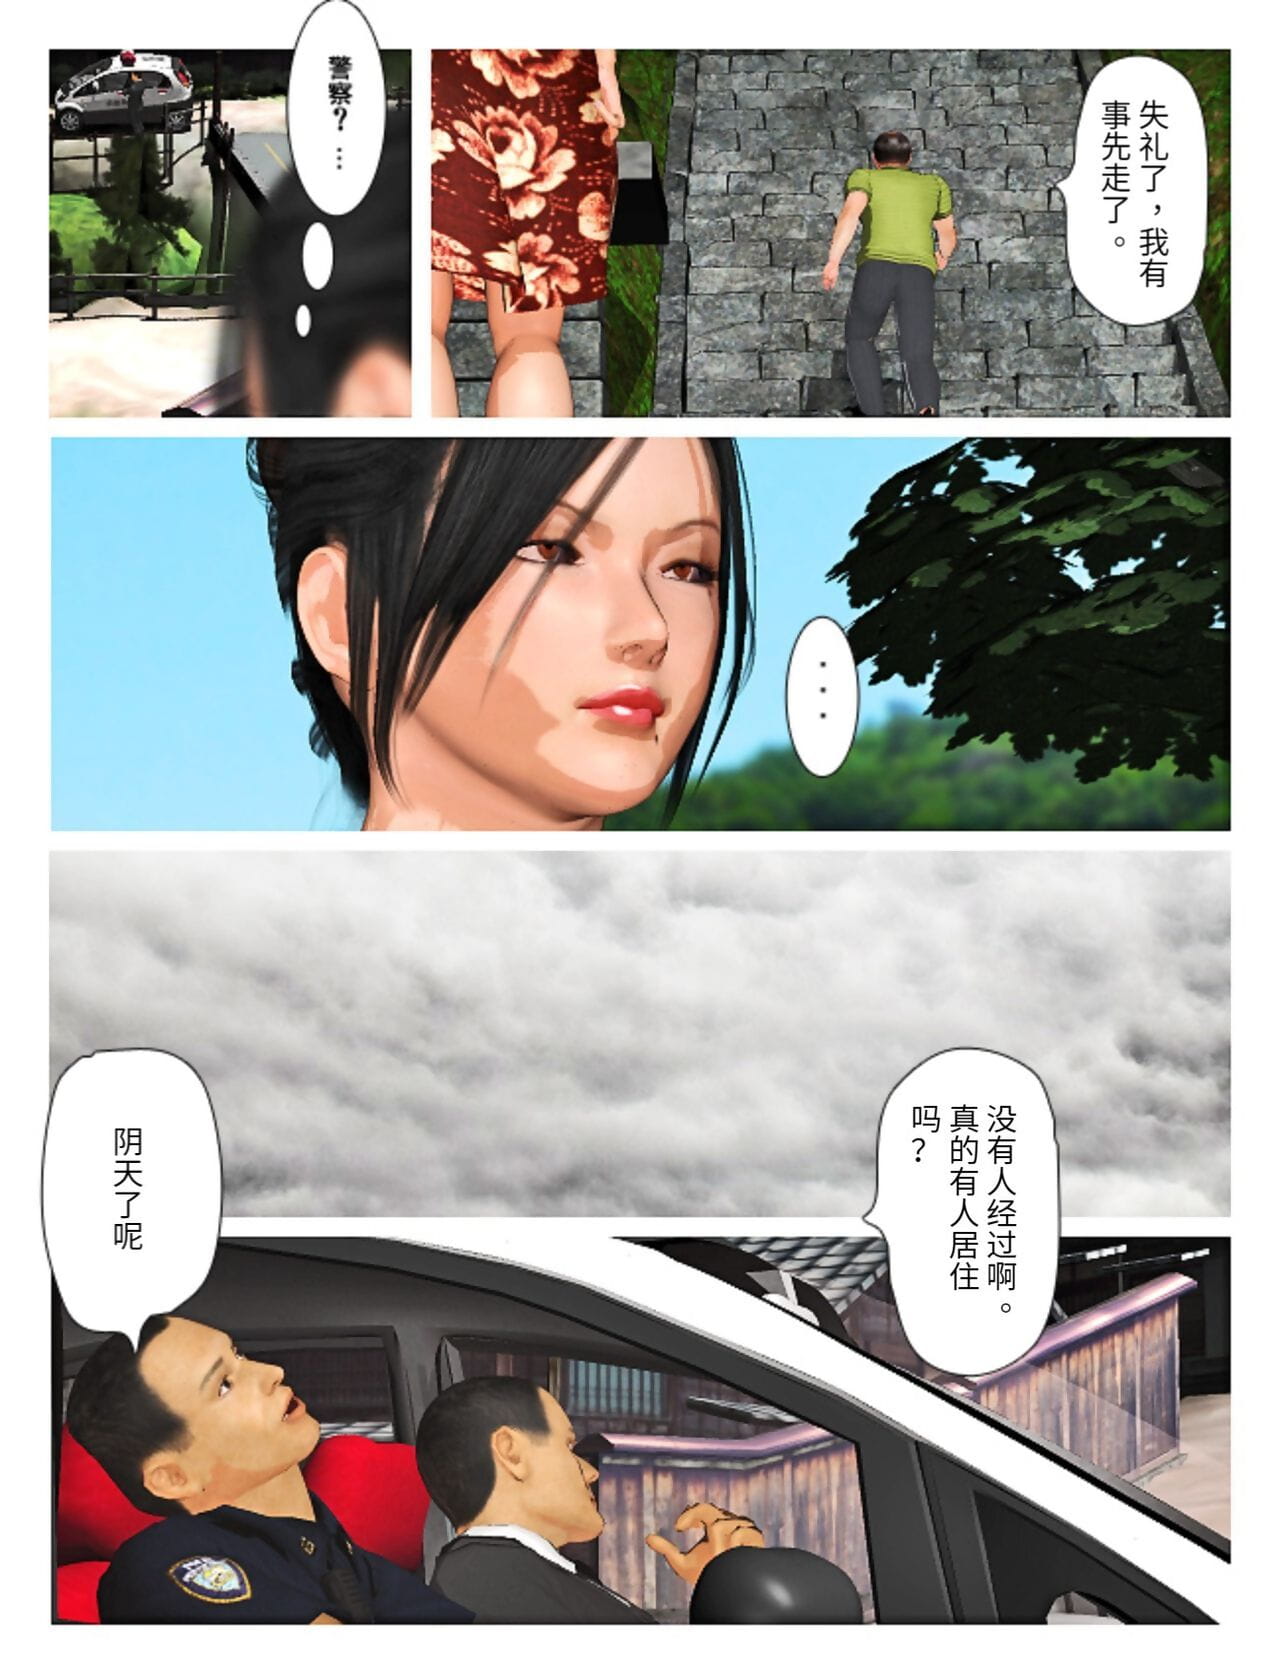 Kyou no Misako-san 2019:4 - part 3 page 1